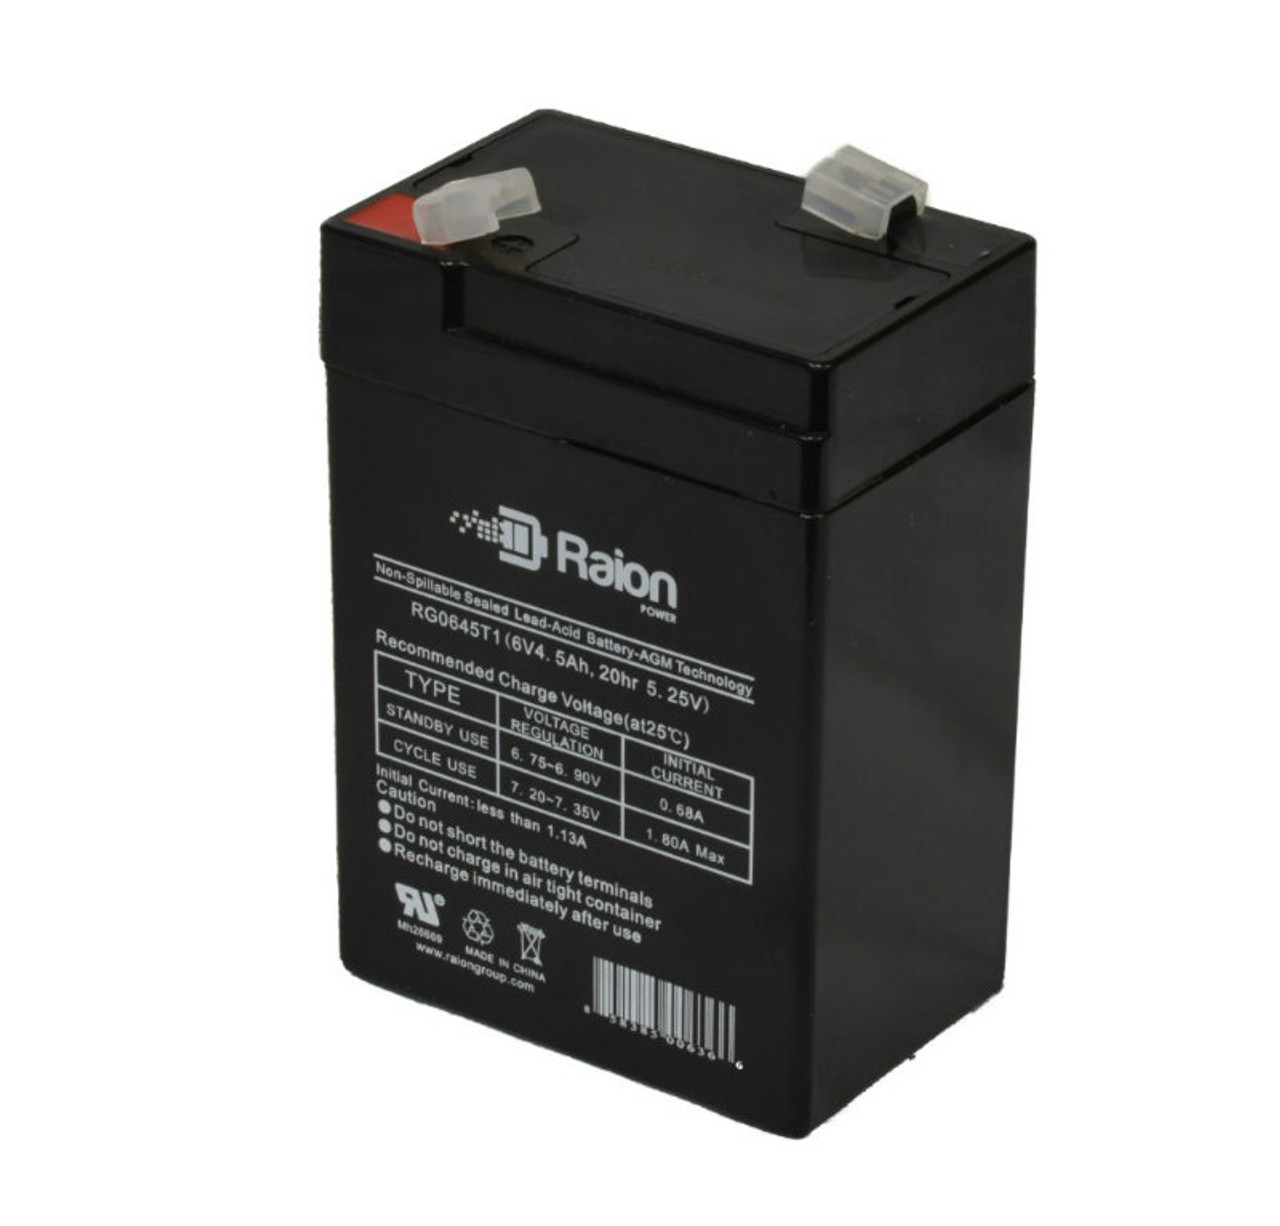 Raion Power RG0645T1 6V 4.5Ah Replacement Battery Cartridge for Emergi-Lite CSM9